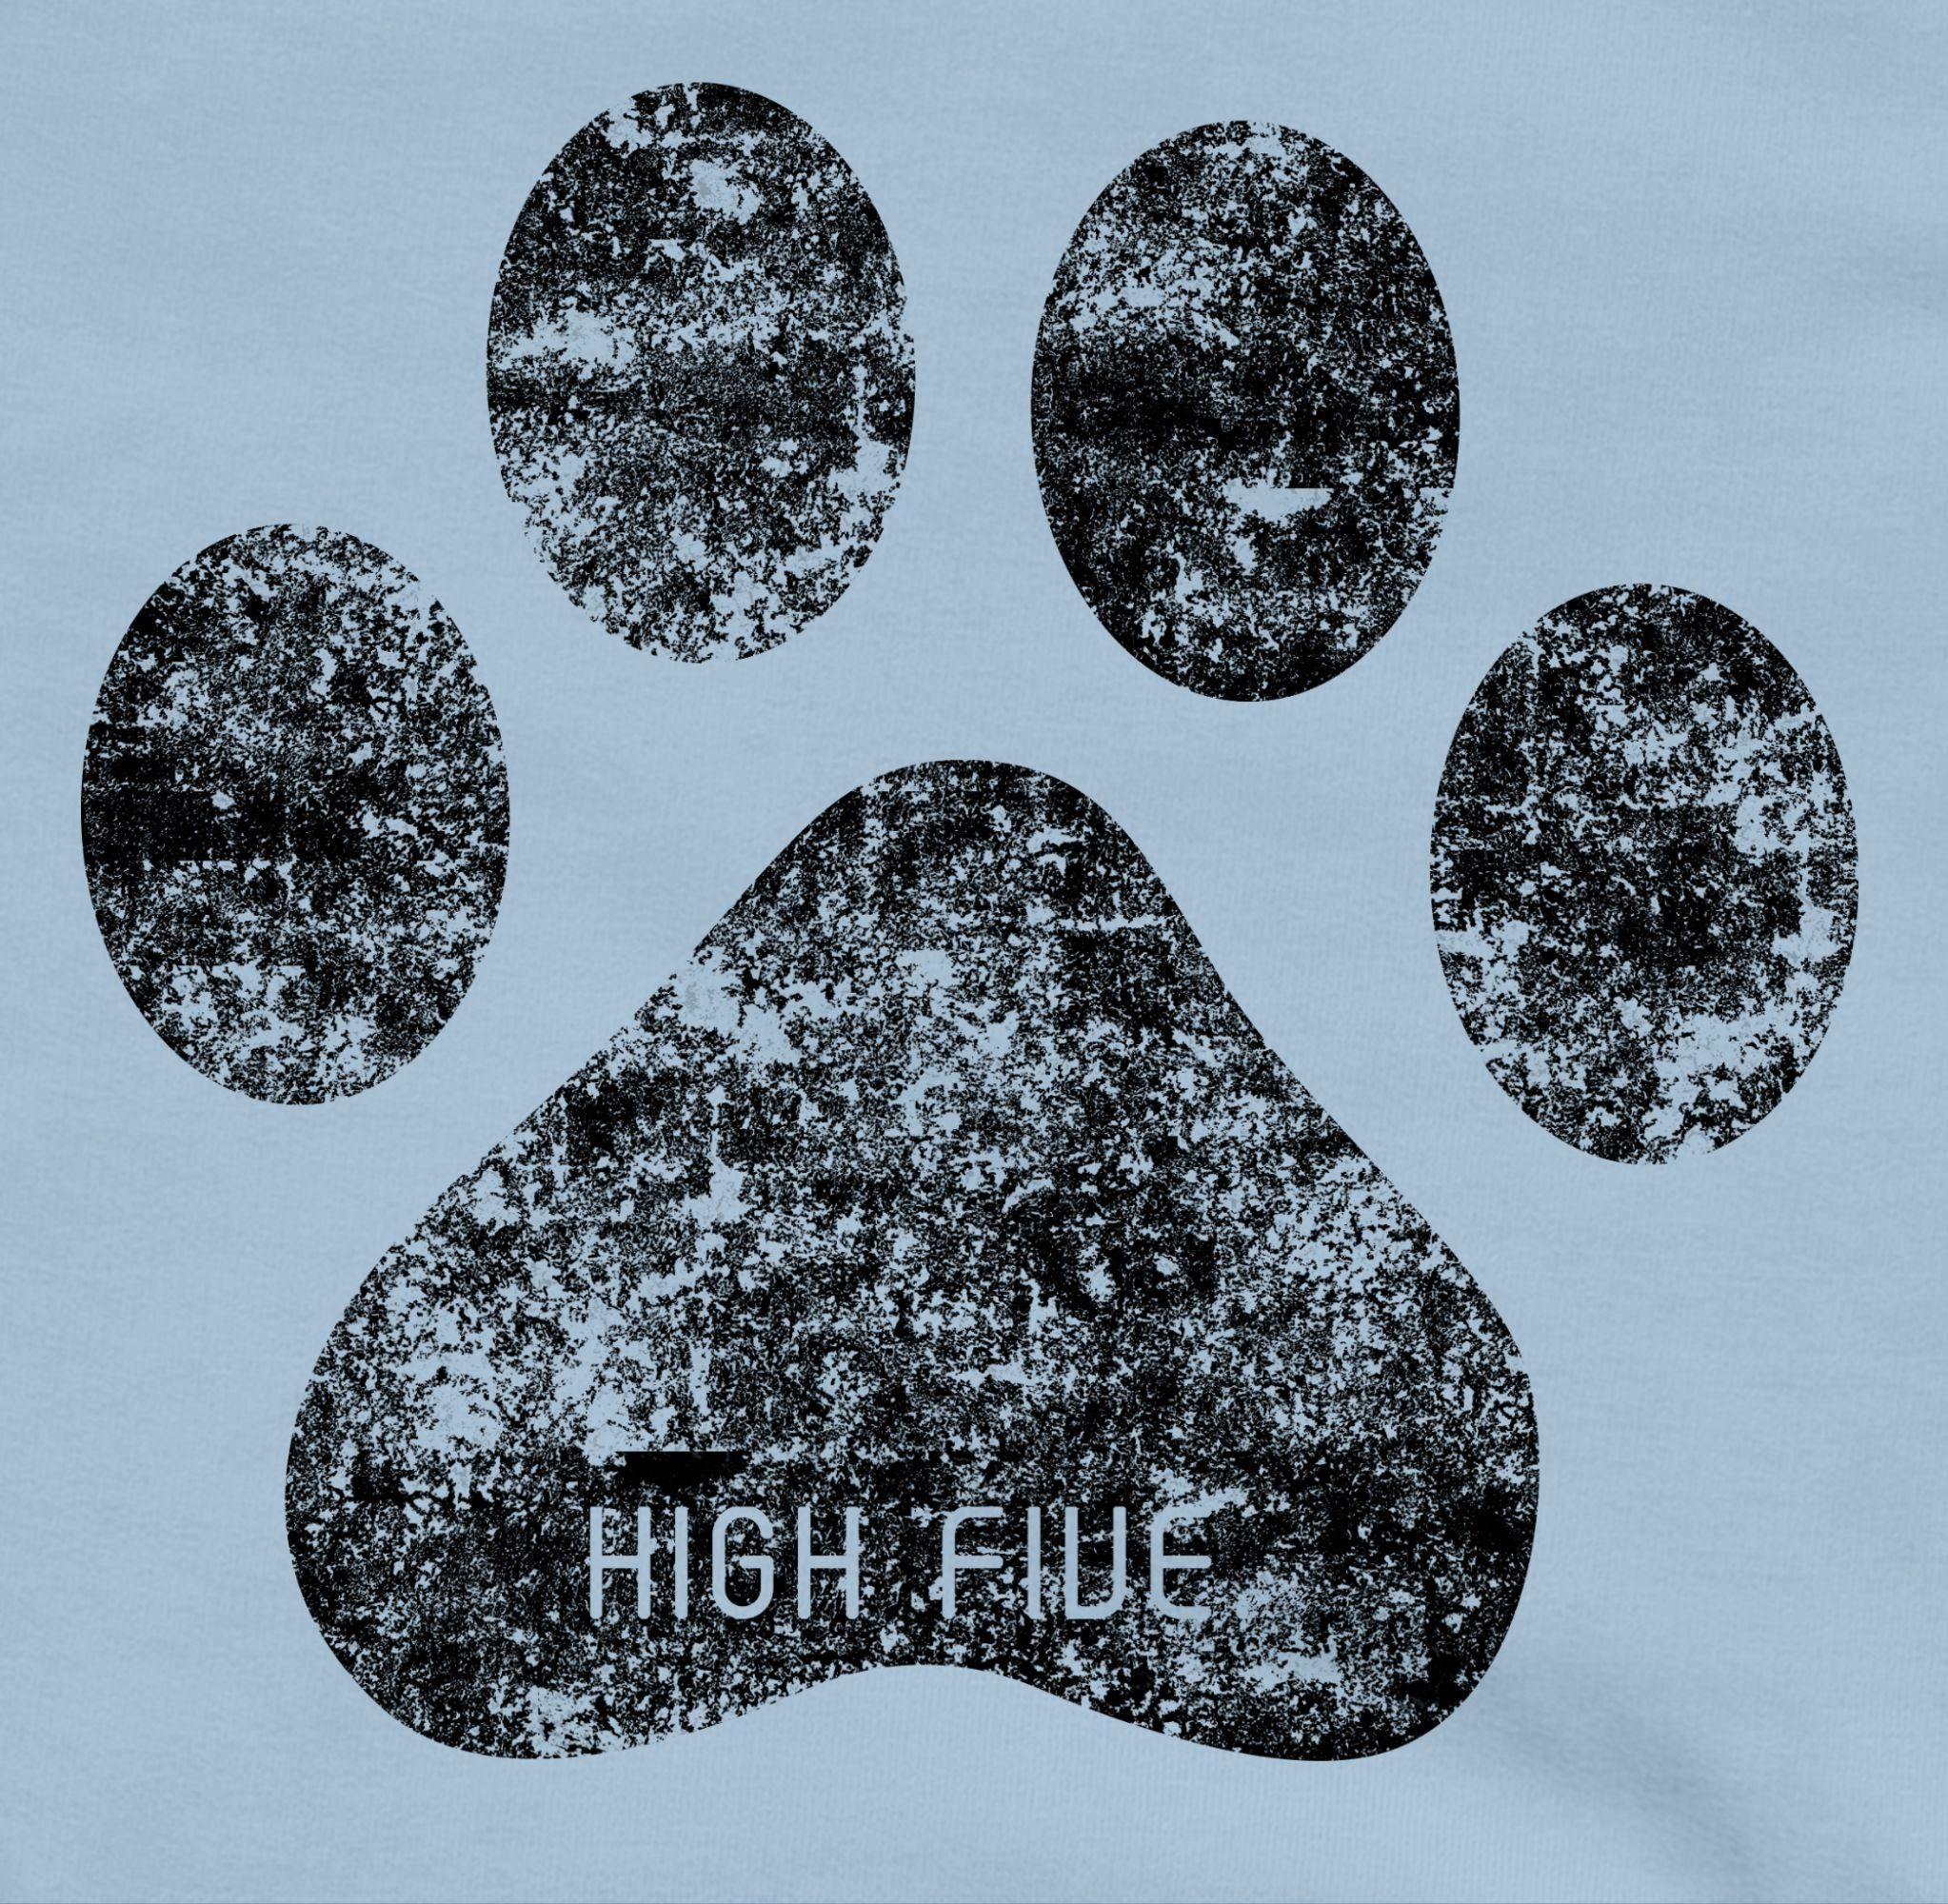 1 Shirtracer Print Hellblau Sweatshirt High Pfote Animal Tiermotiv Hunde Five